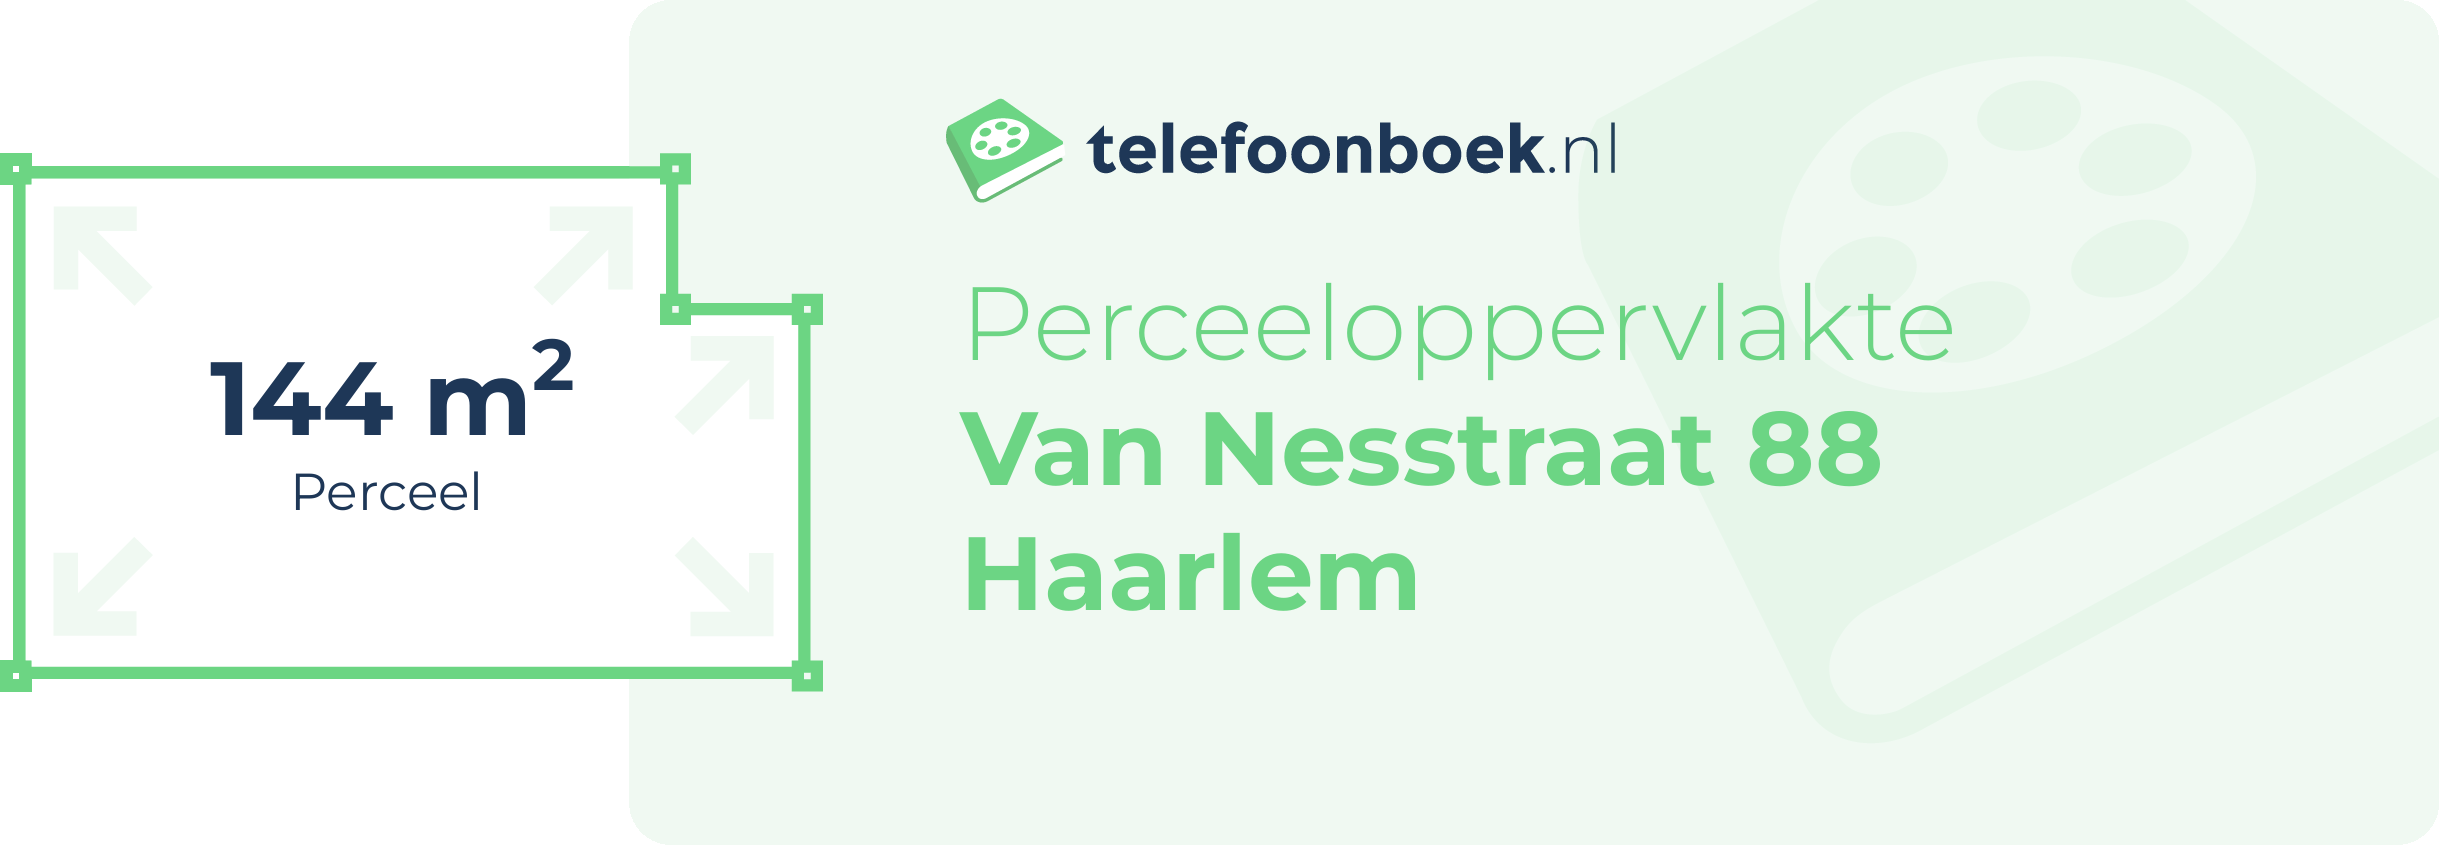 Perceeloppervlakte Van Nesstraat 88 Haarlem